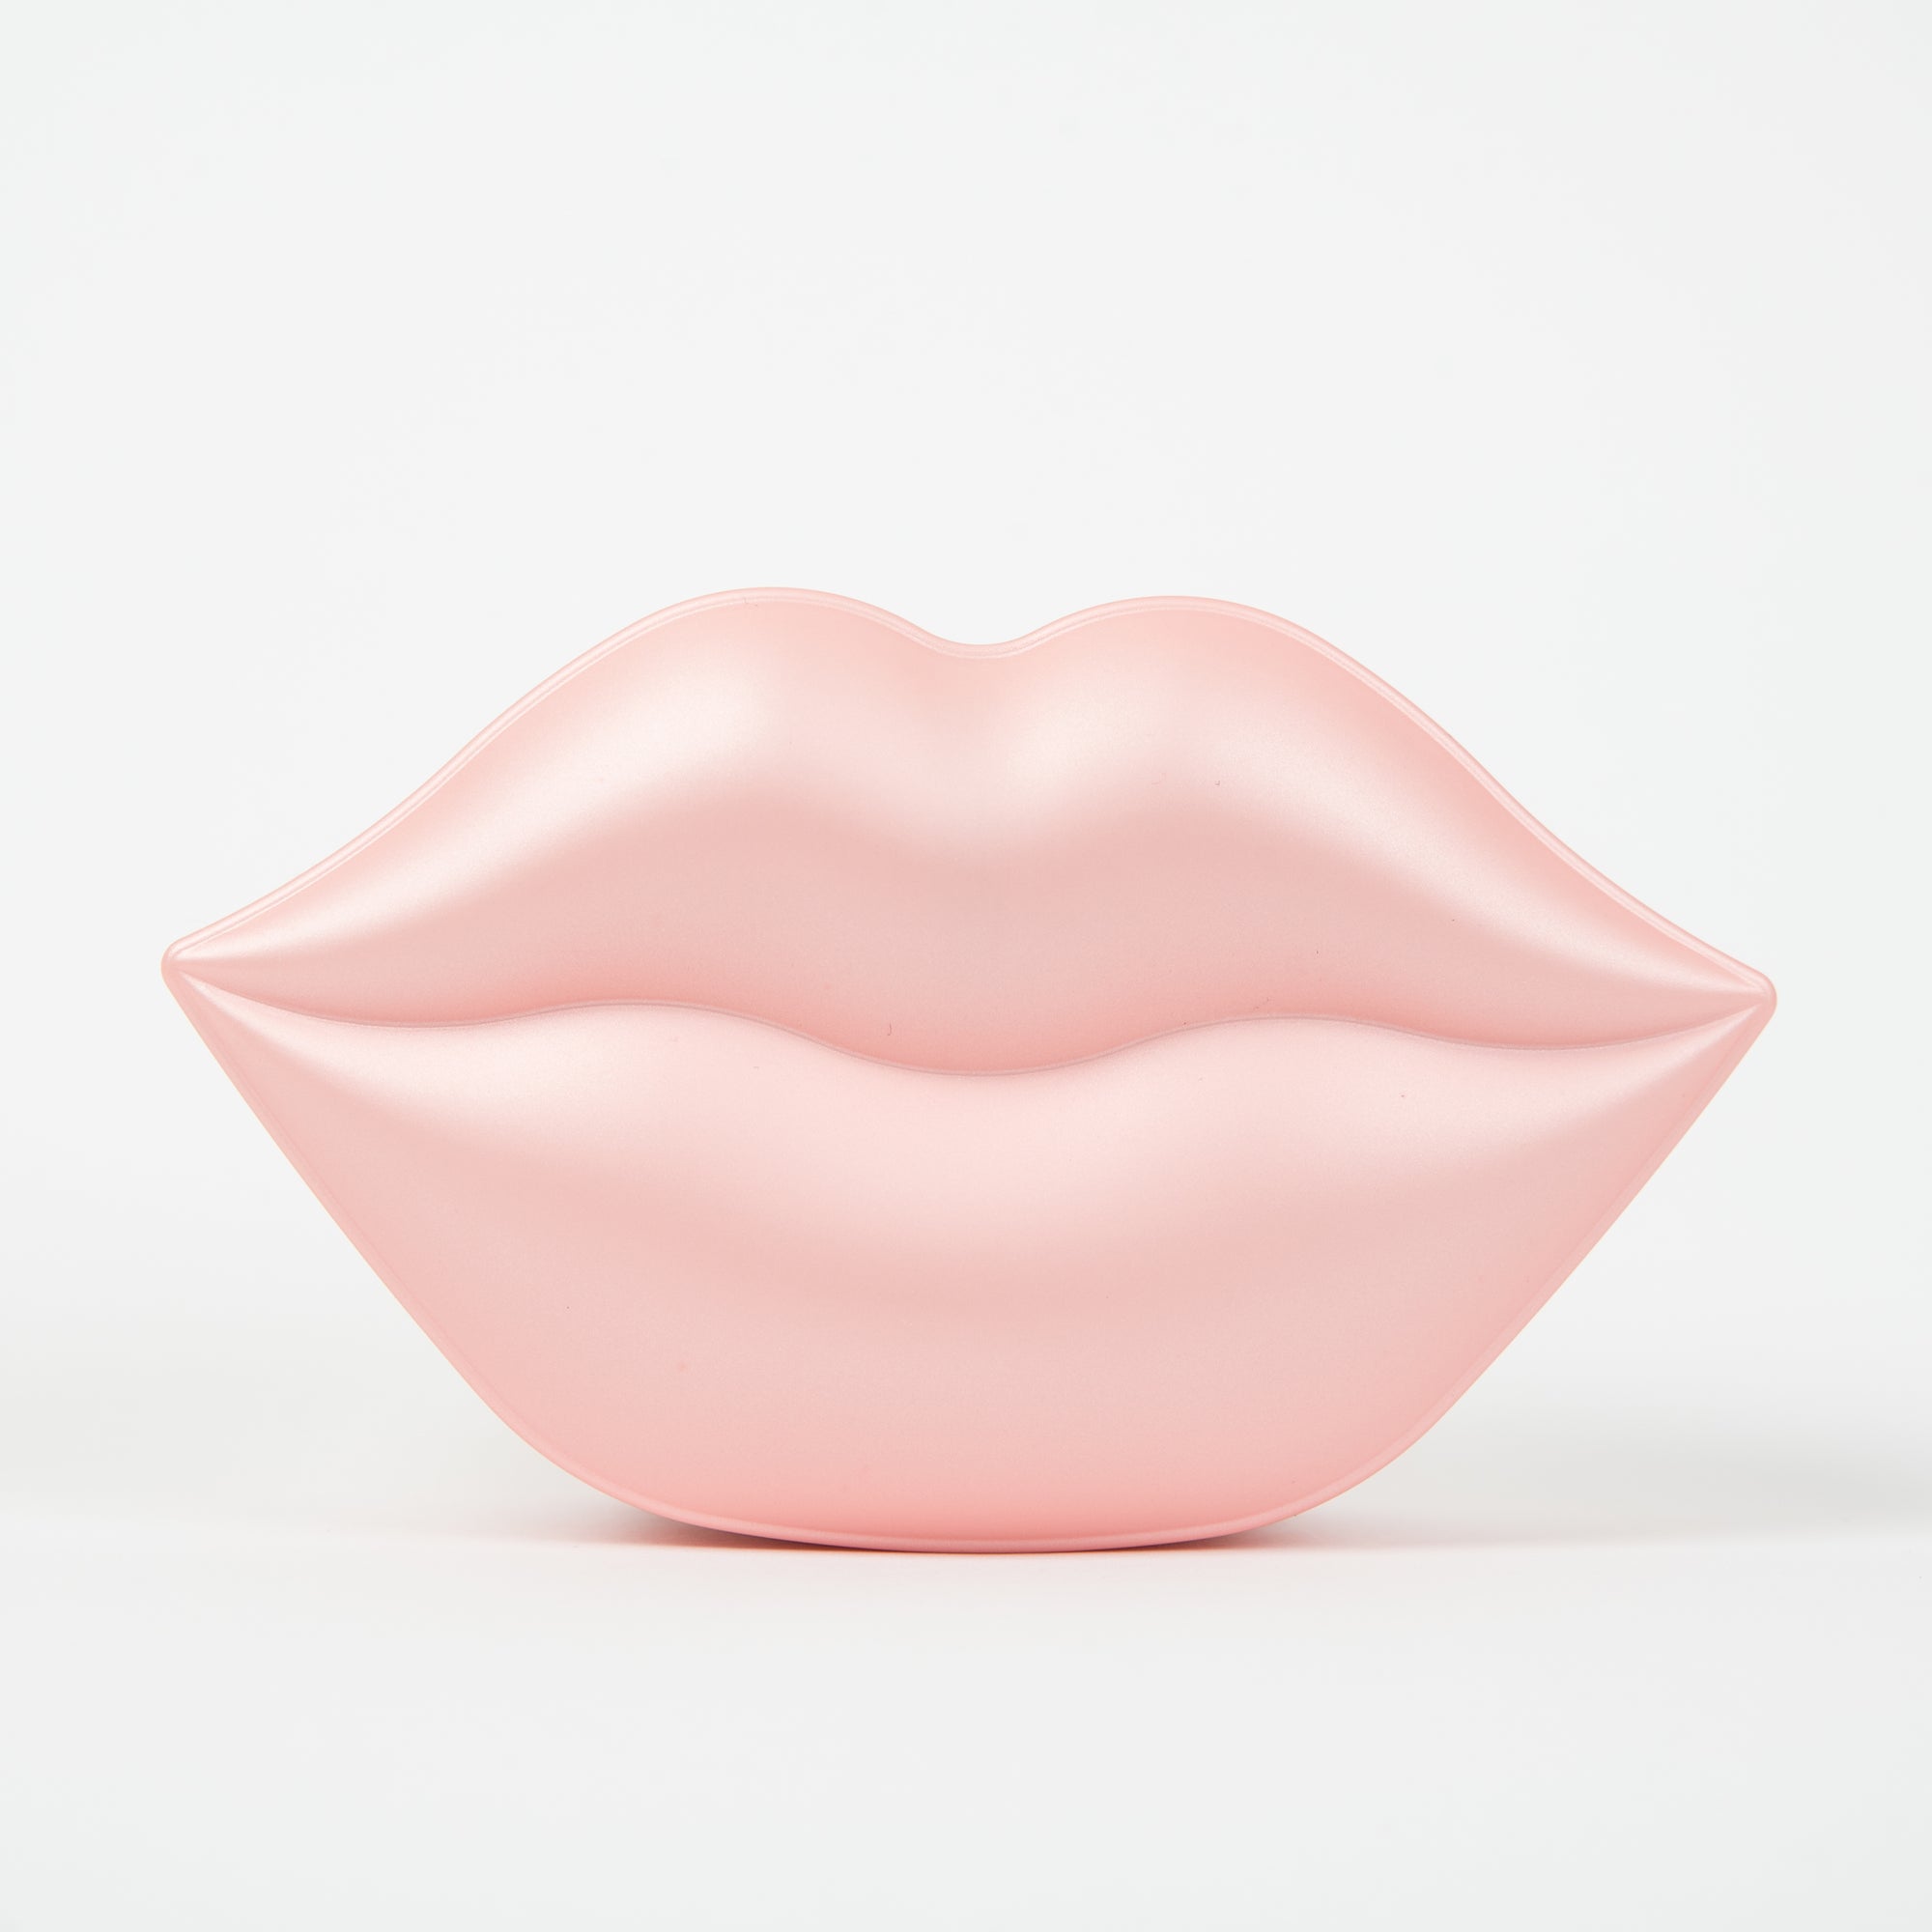 Kocostar Cherry Blossom Lip Masks x20